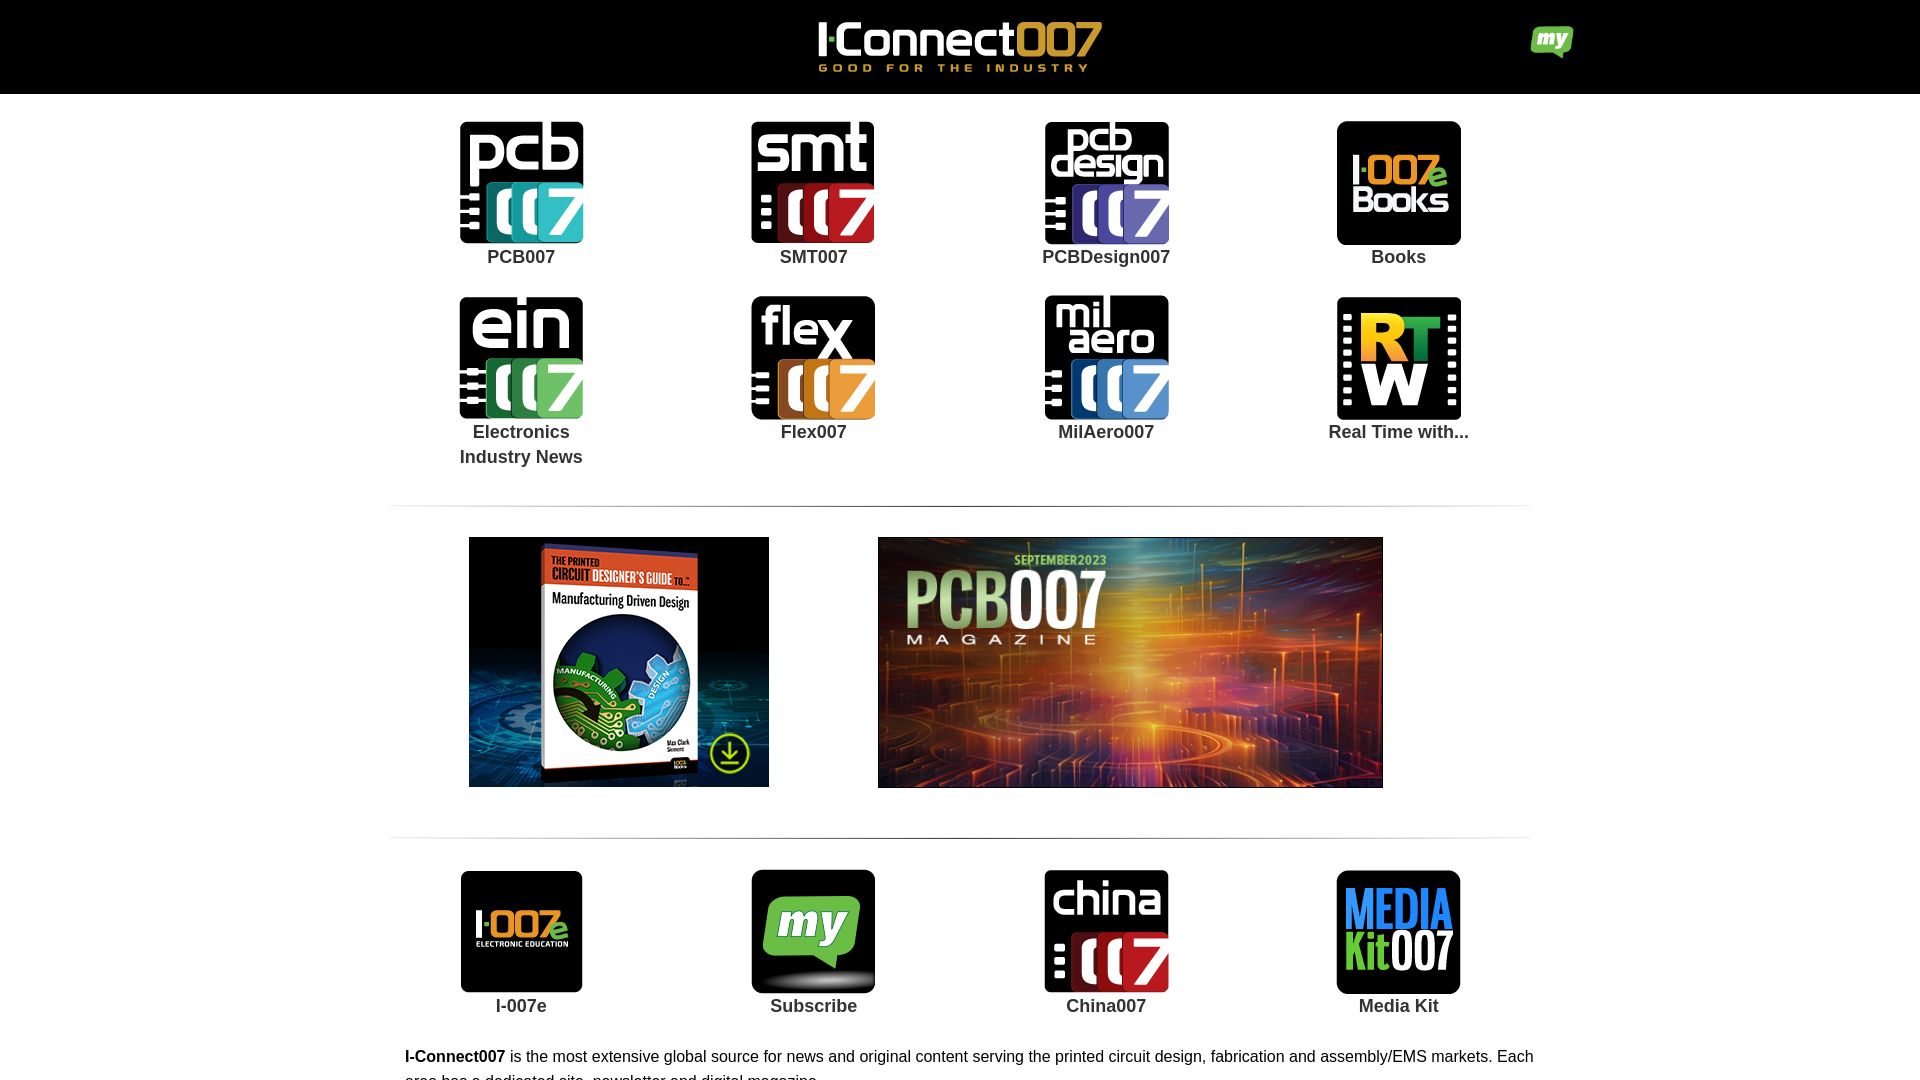 Website status design.iconnect007.com is   ONLINE